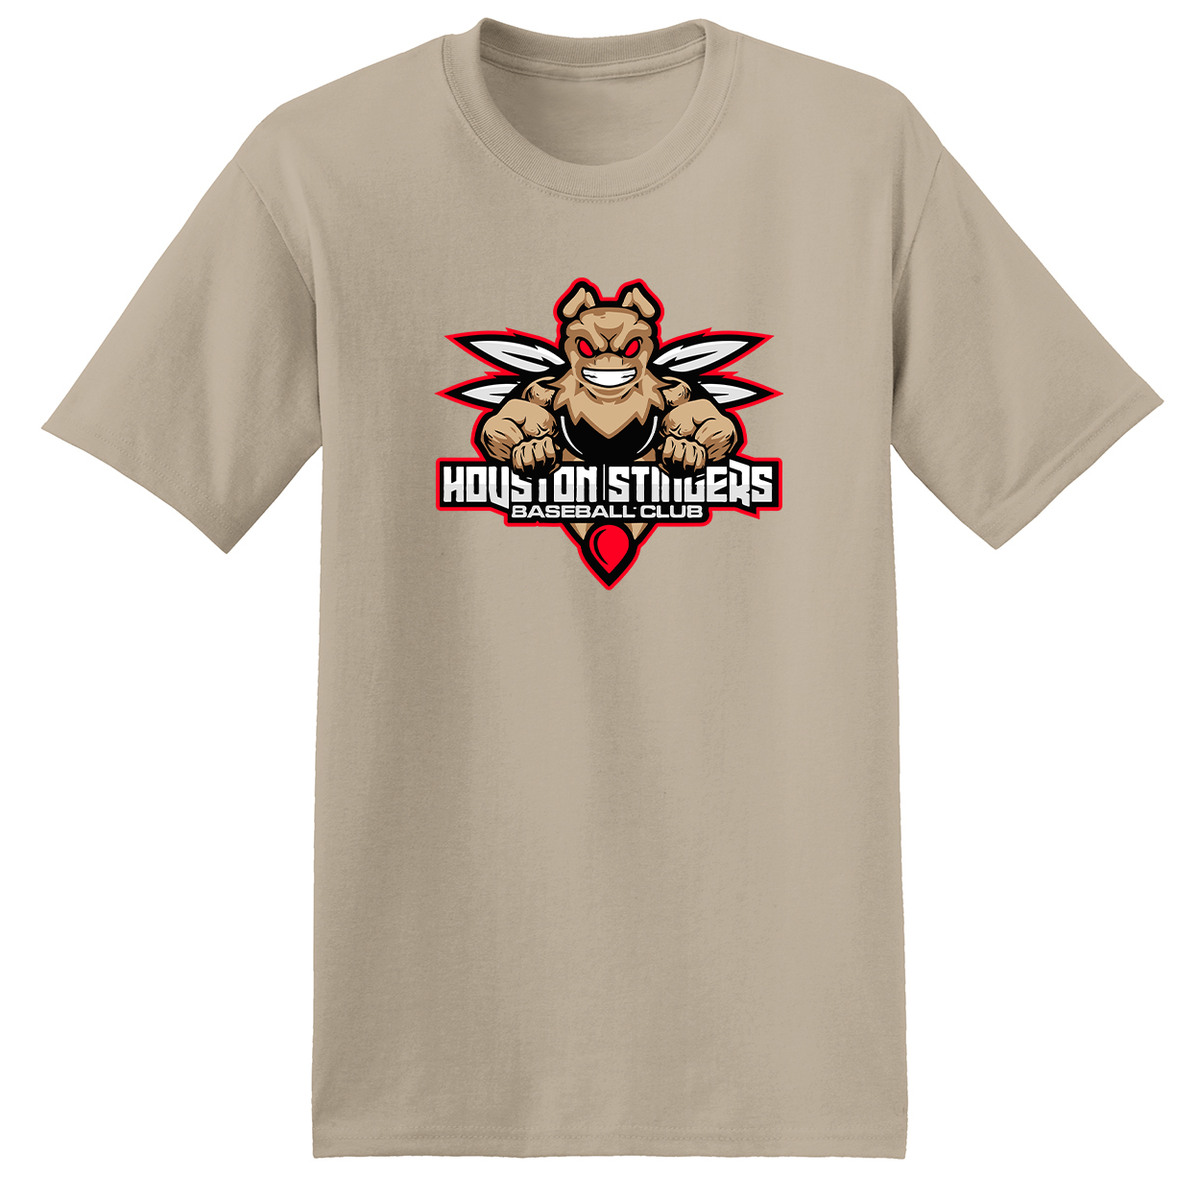 Houston Stingers Baseball Club T-Shirt